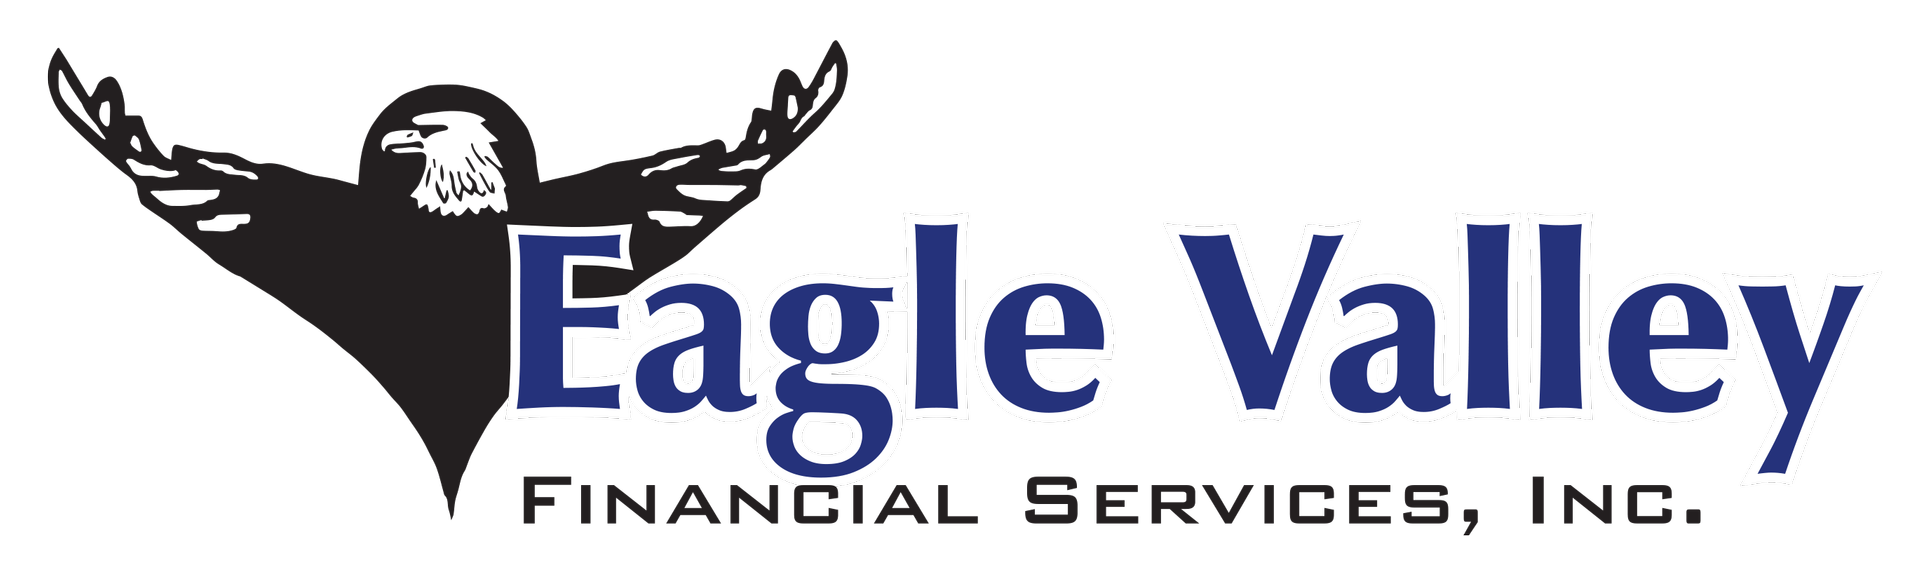 Eagle Valley Financial Services